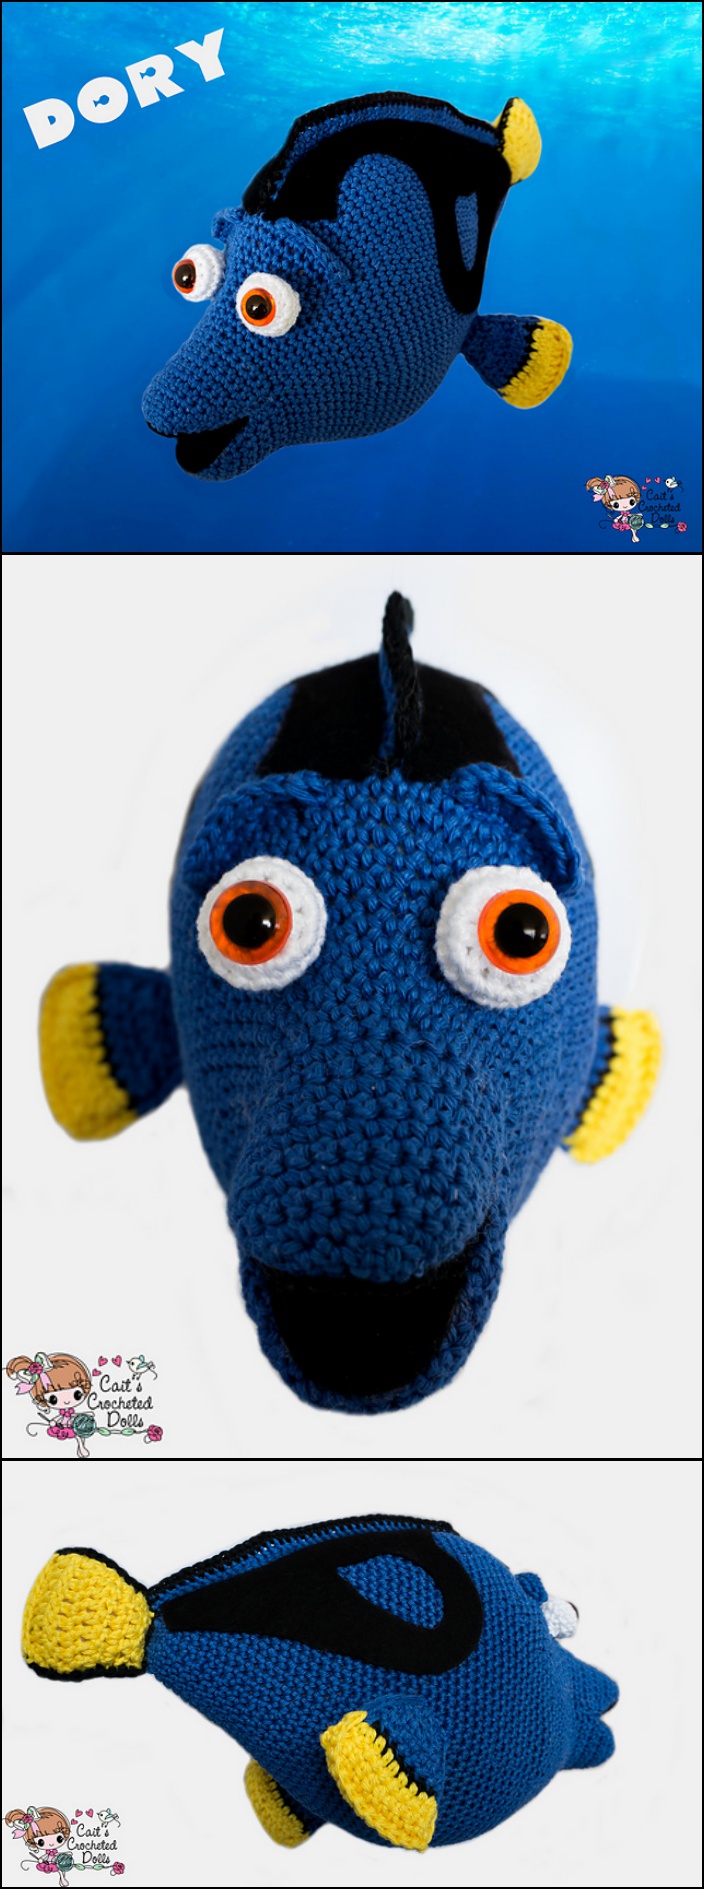 Crochet Dory fish from Finding Nemo pattern